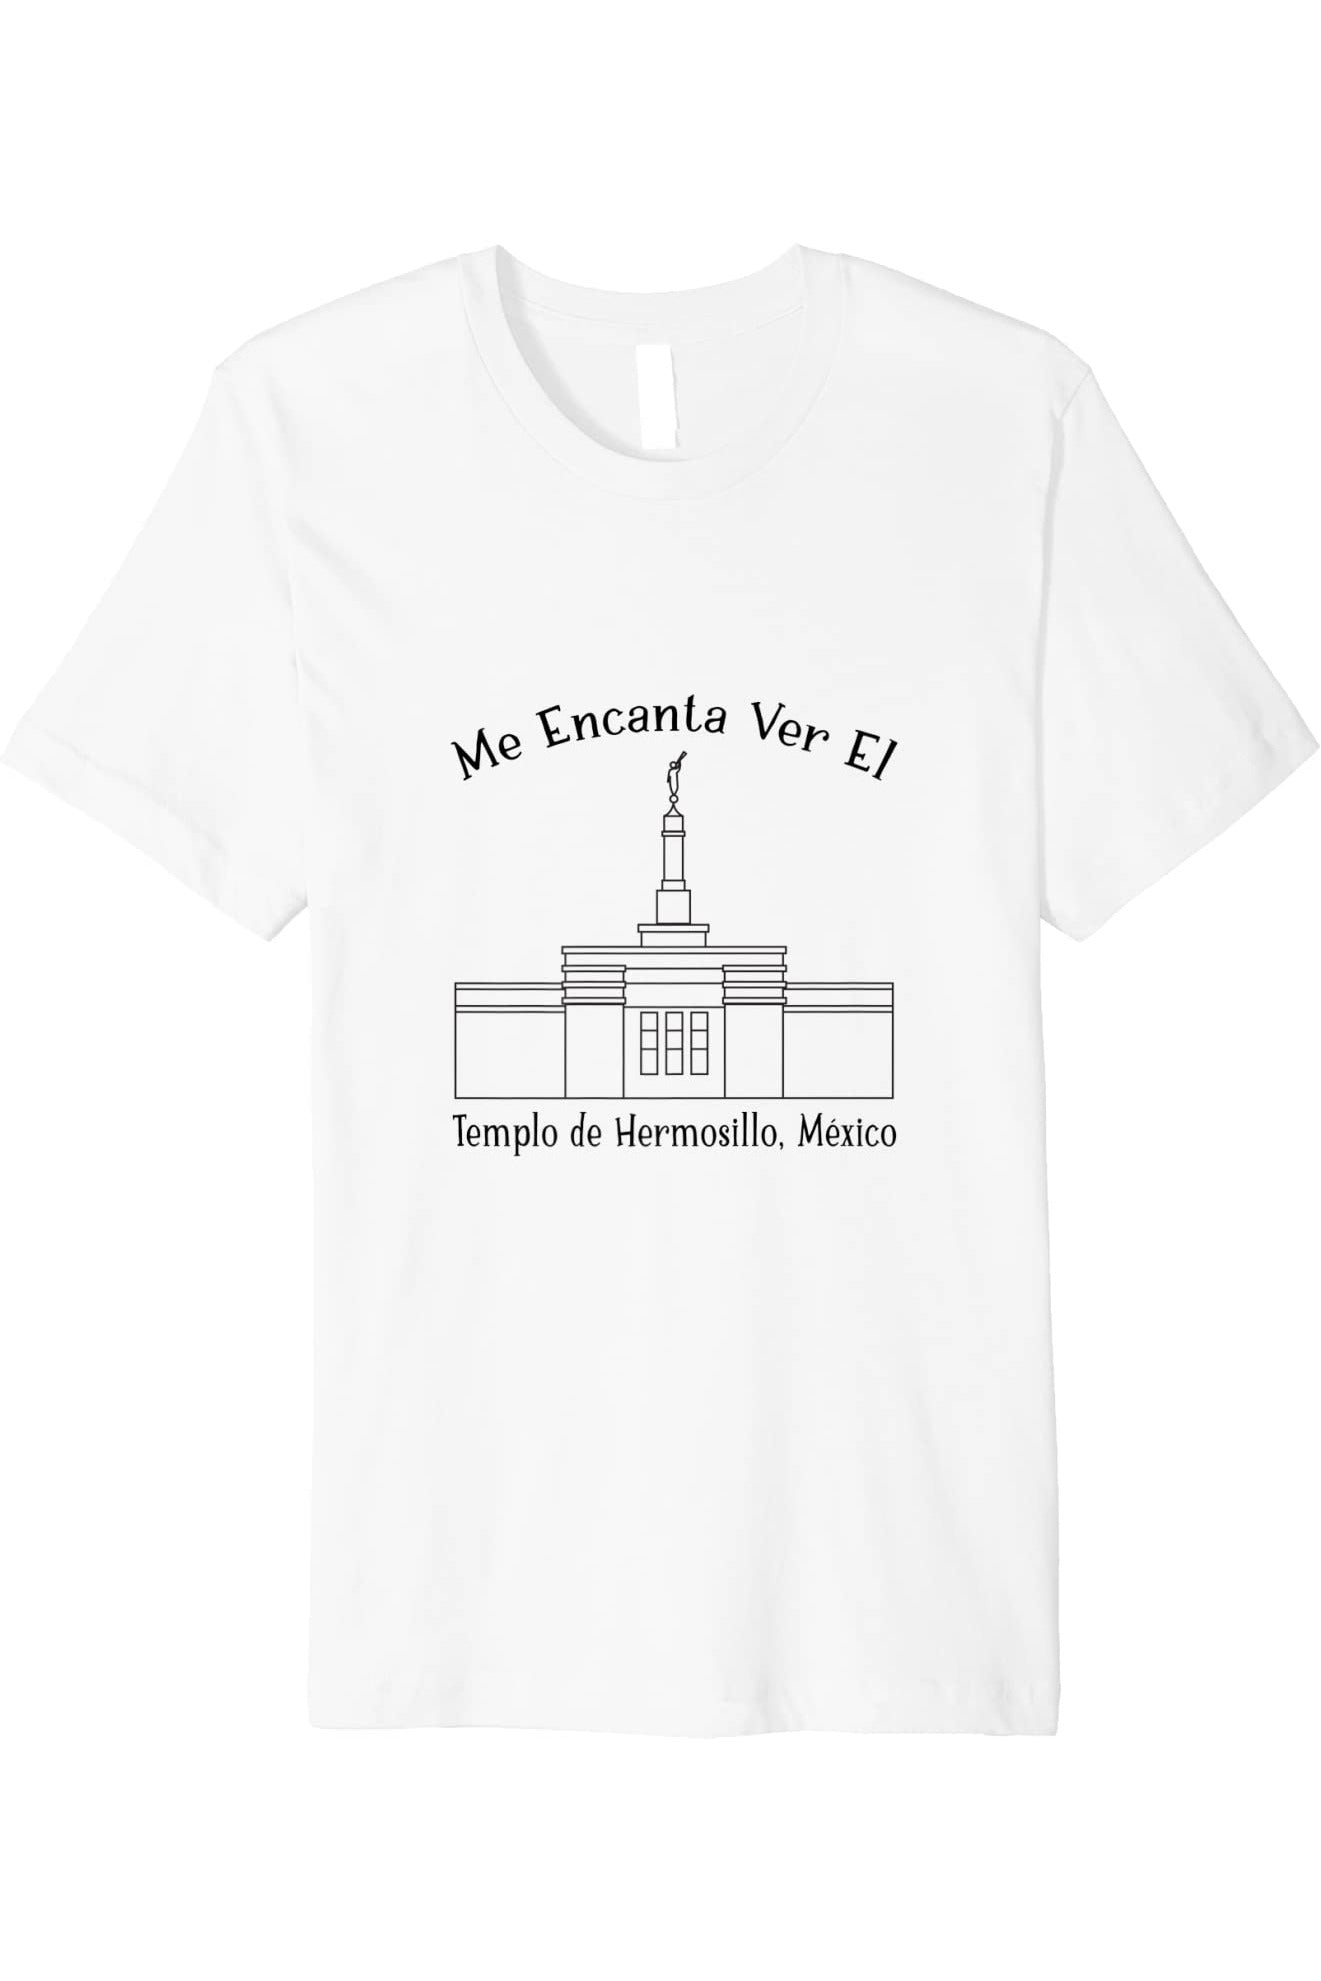 Hermosillo Mexico Temple T-Shirt - Premium - Happy Style (Spanish) US